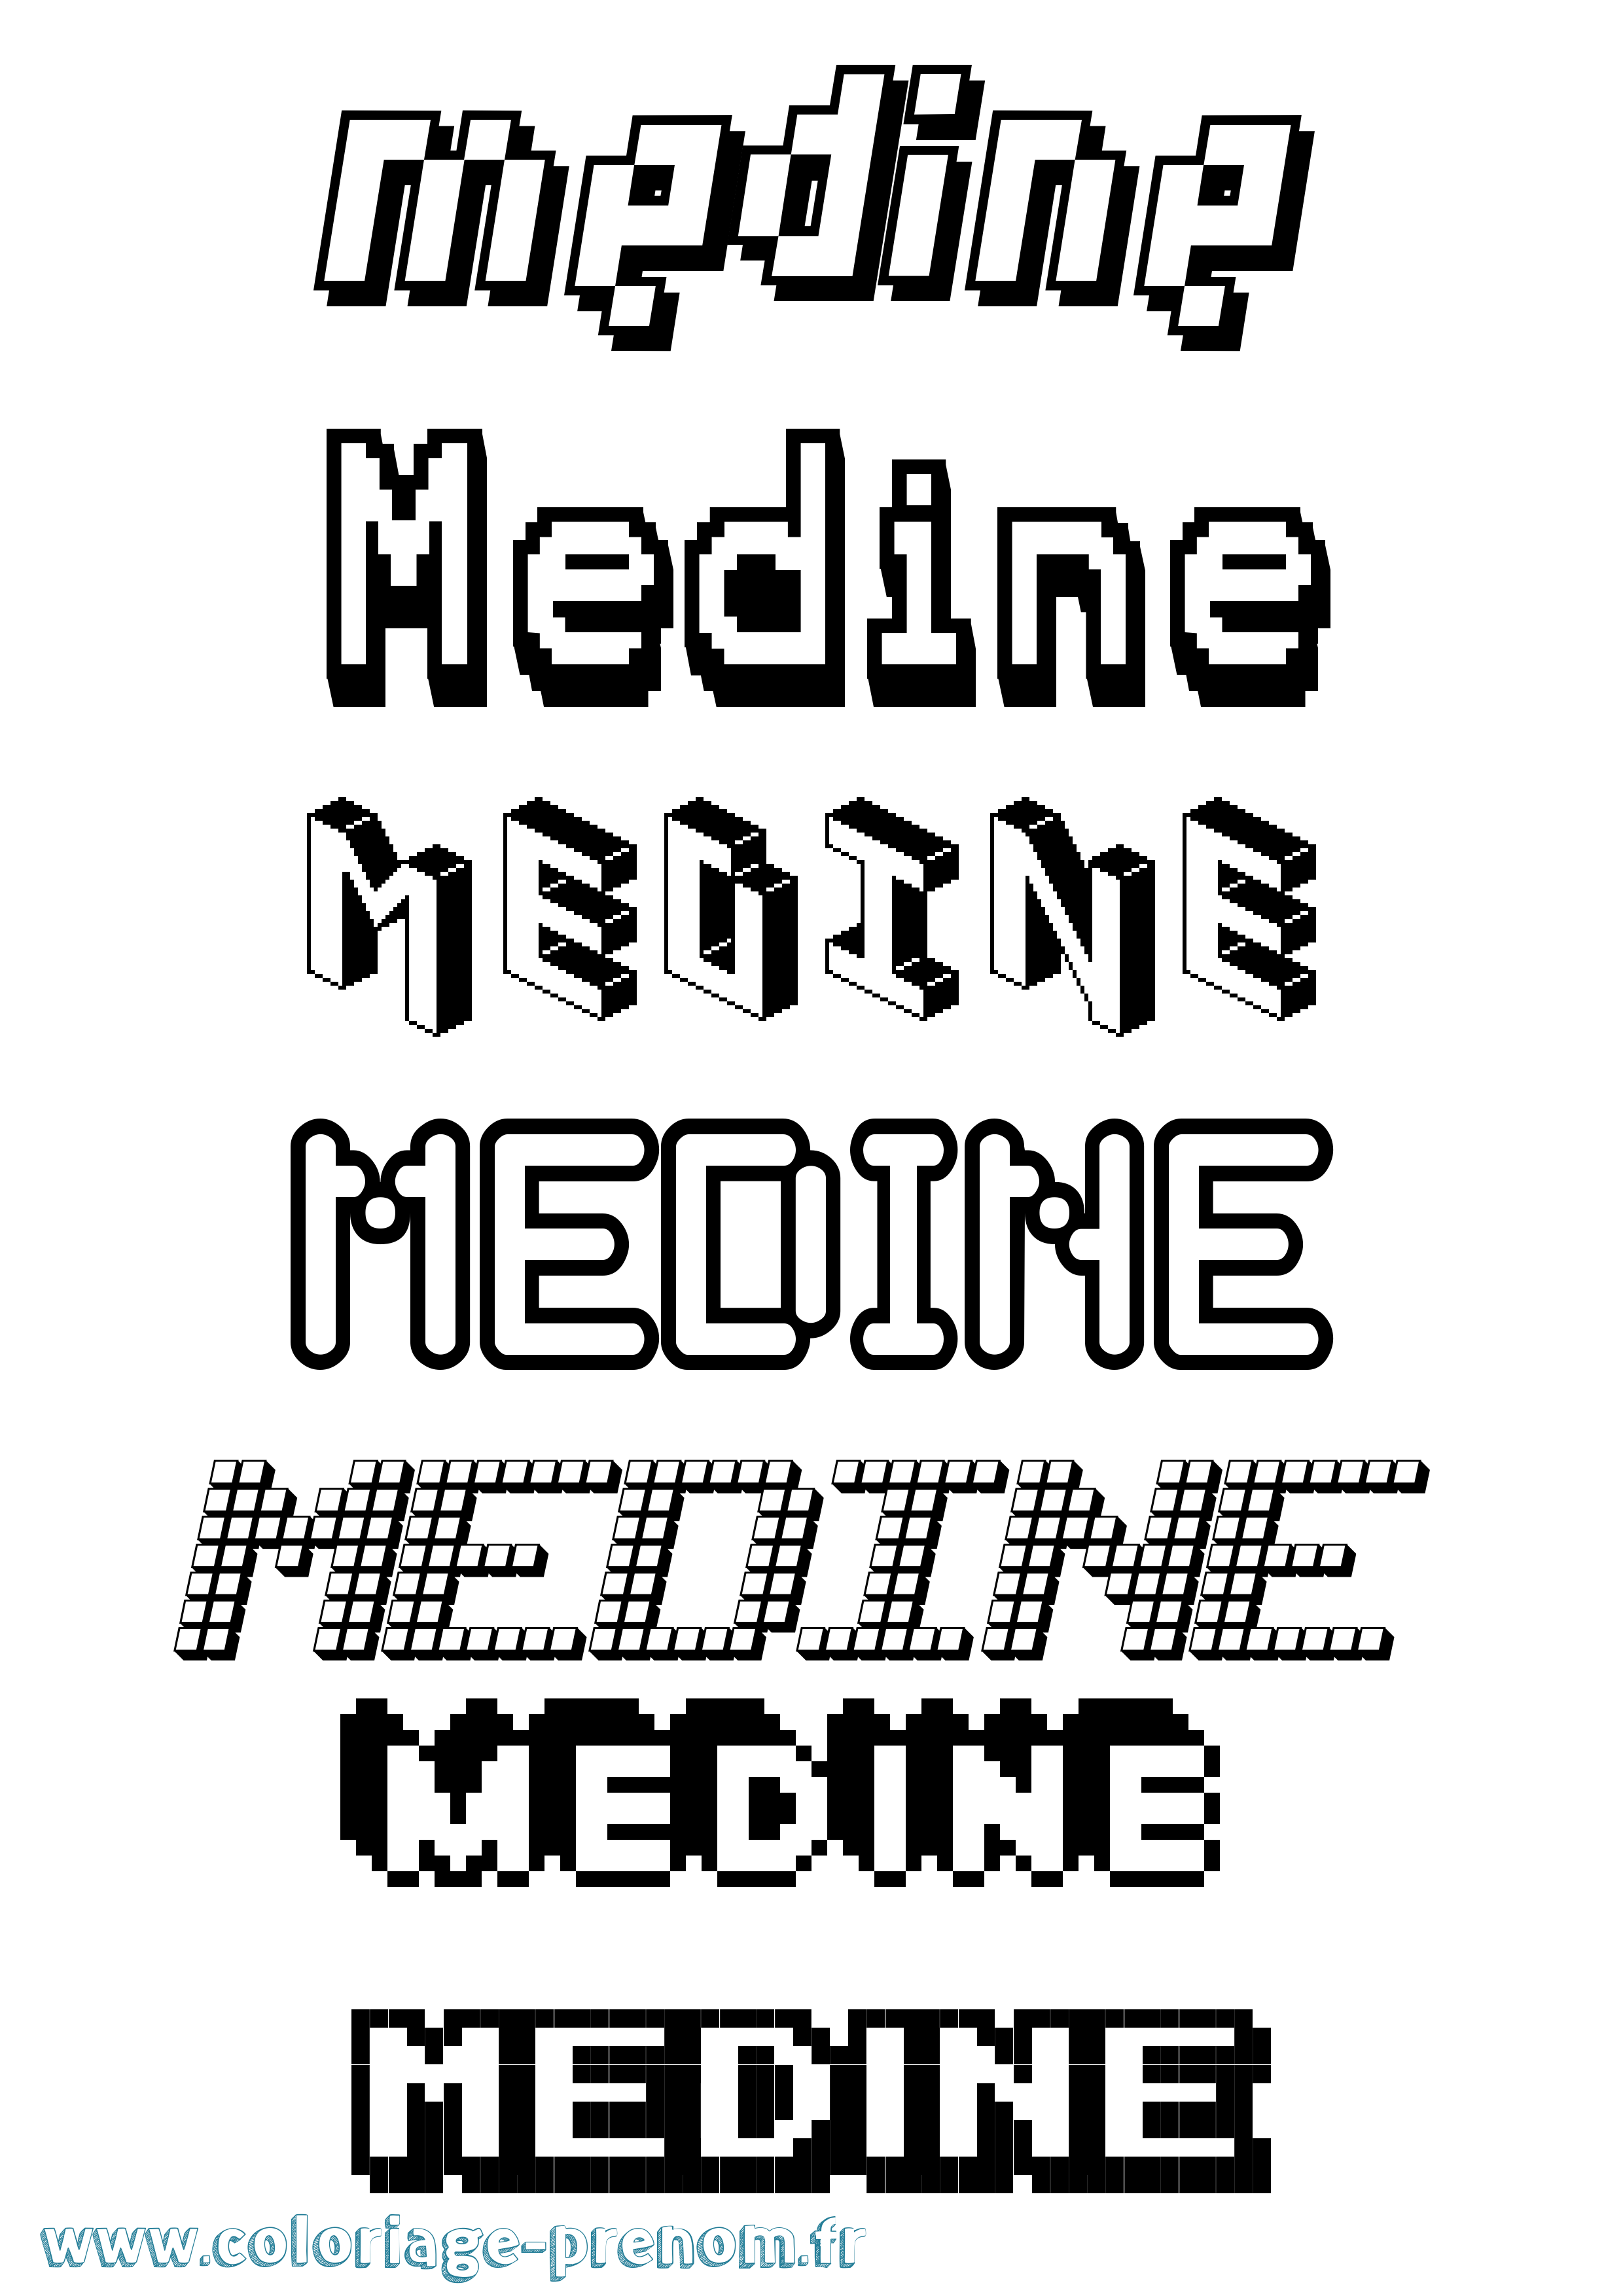 Coloriage prénom Medine Pixel